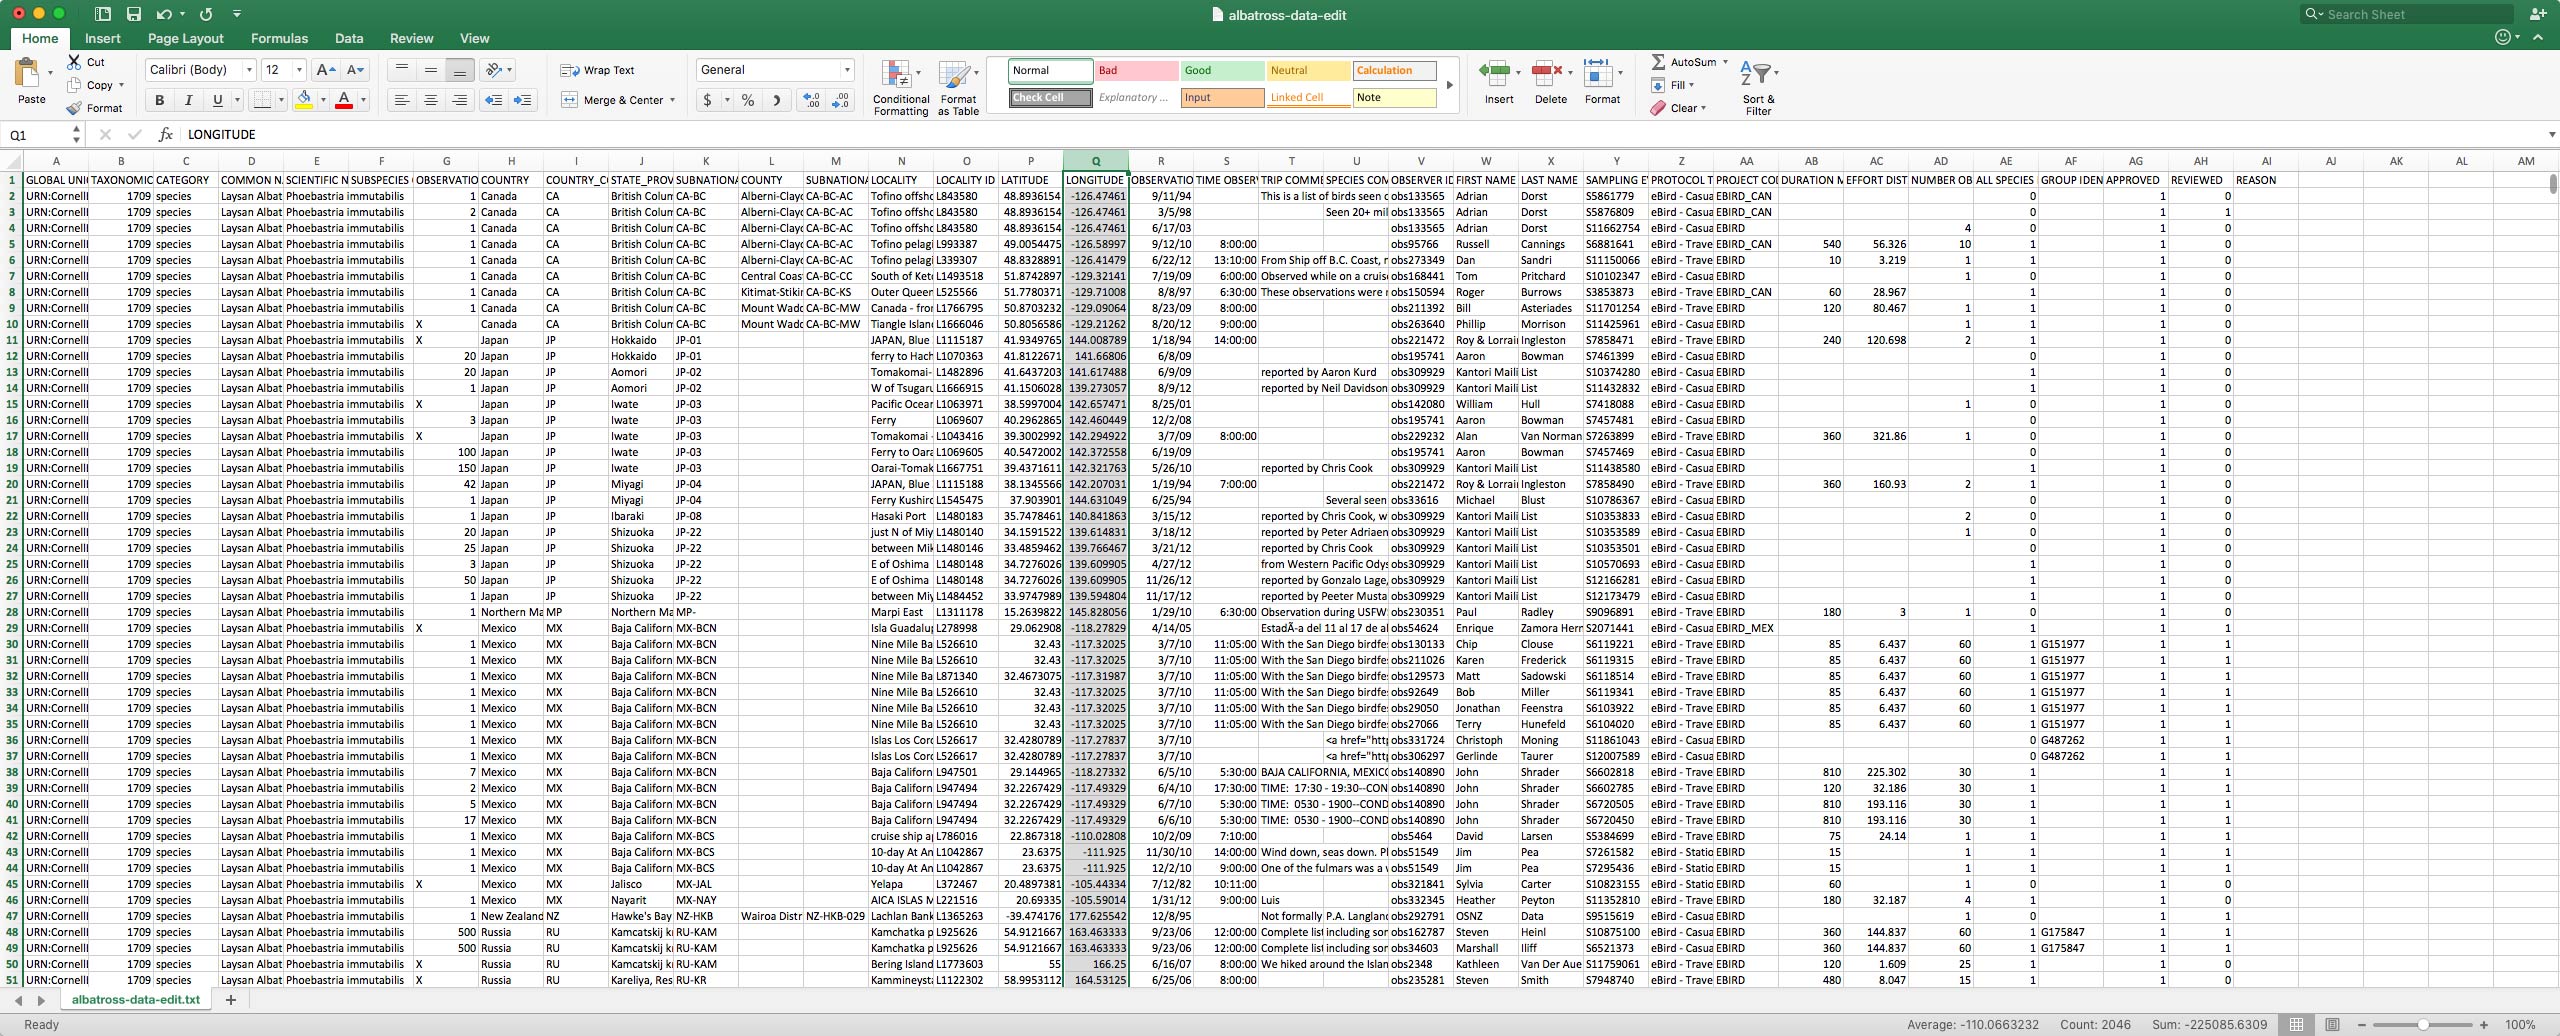 An expansive spreadsheet showing albatross data organized by dozens of columns containing various metadata.